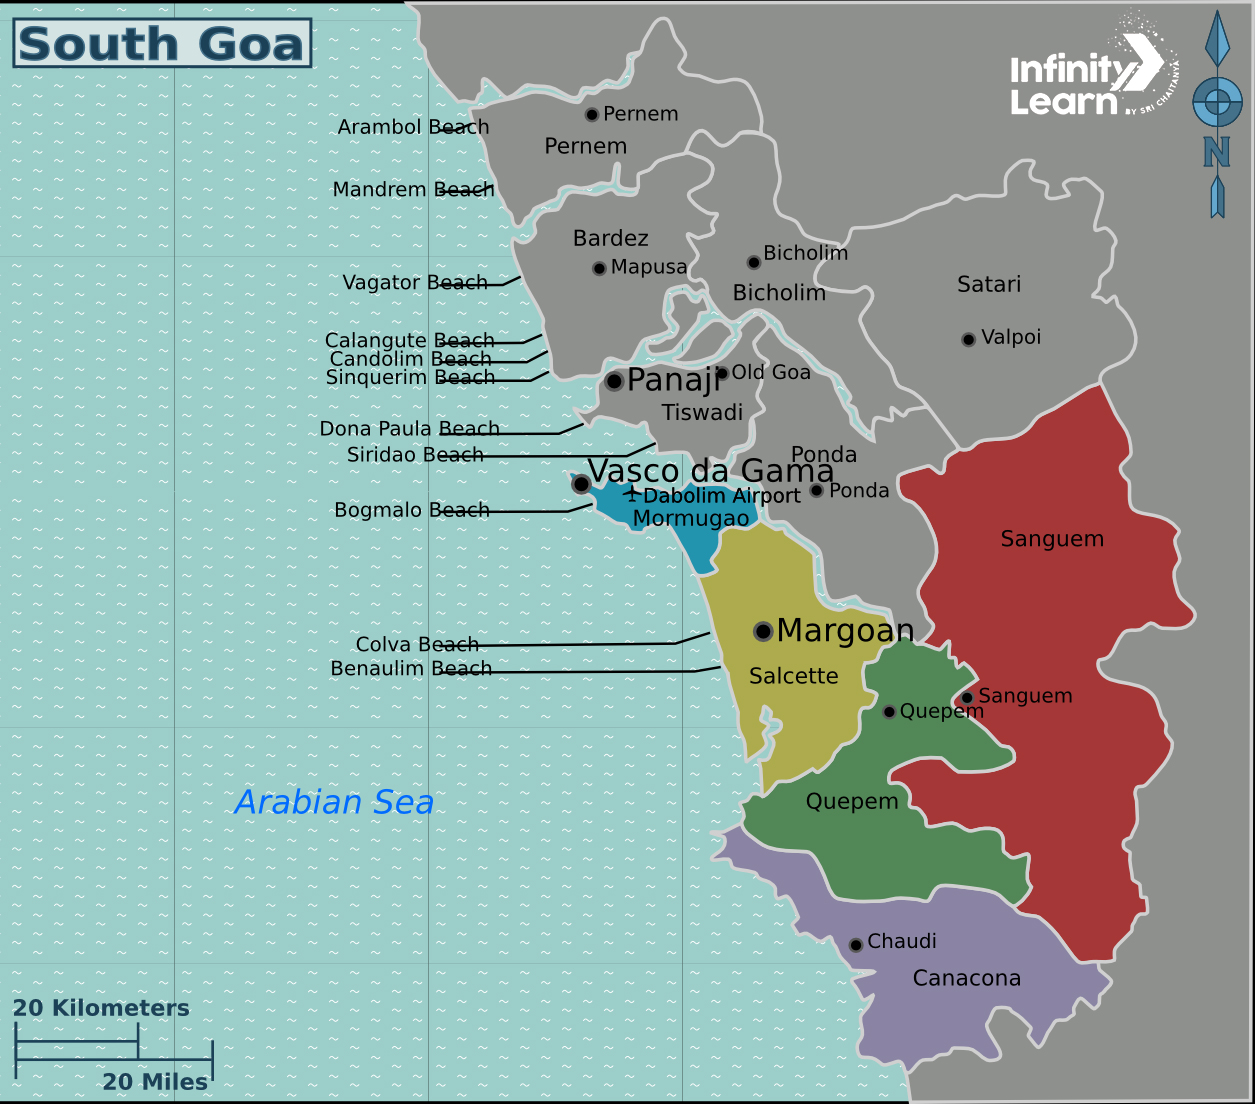 South Goa Map